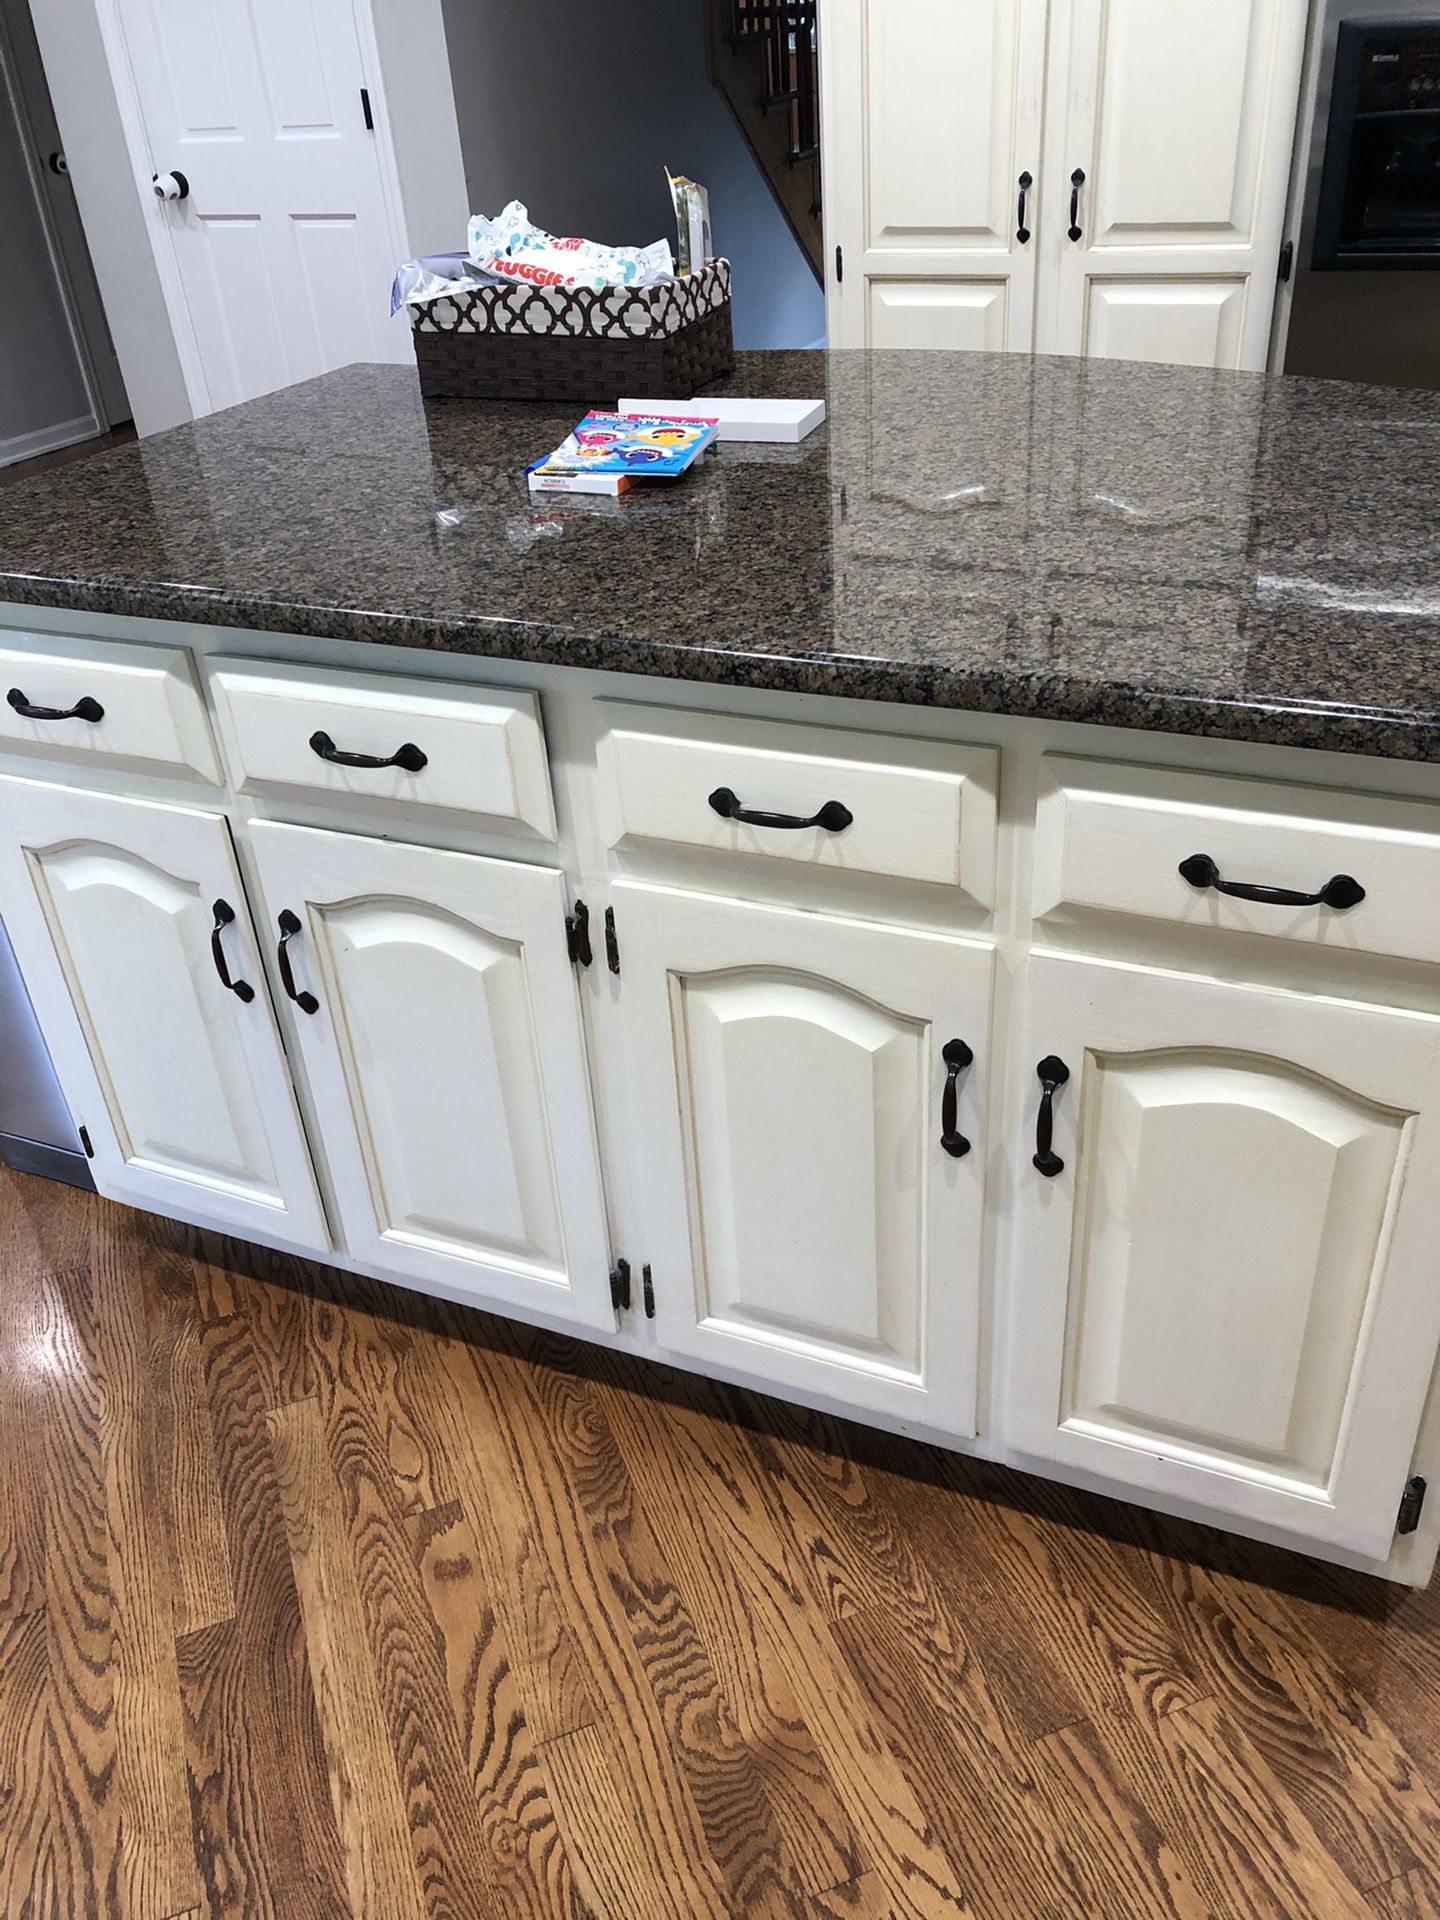 Appliances oak cabinets granite countertops sink faucet 2 pendant lights